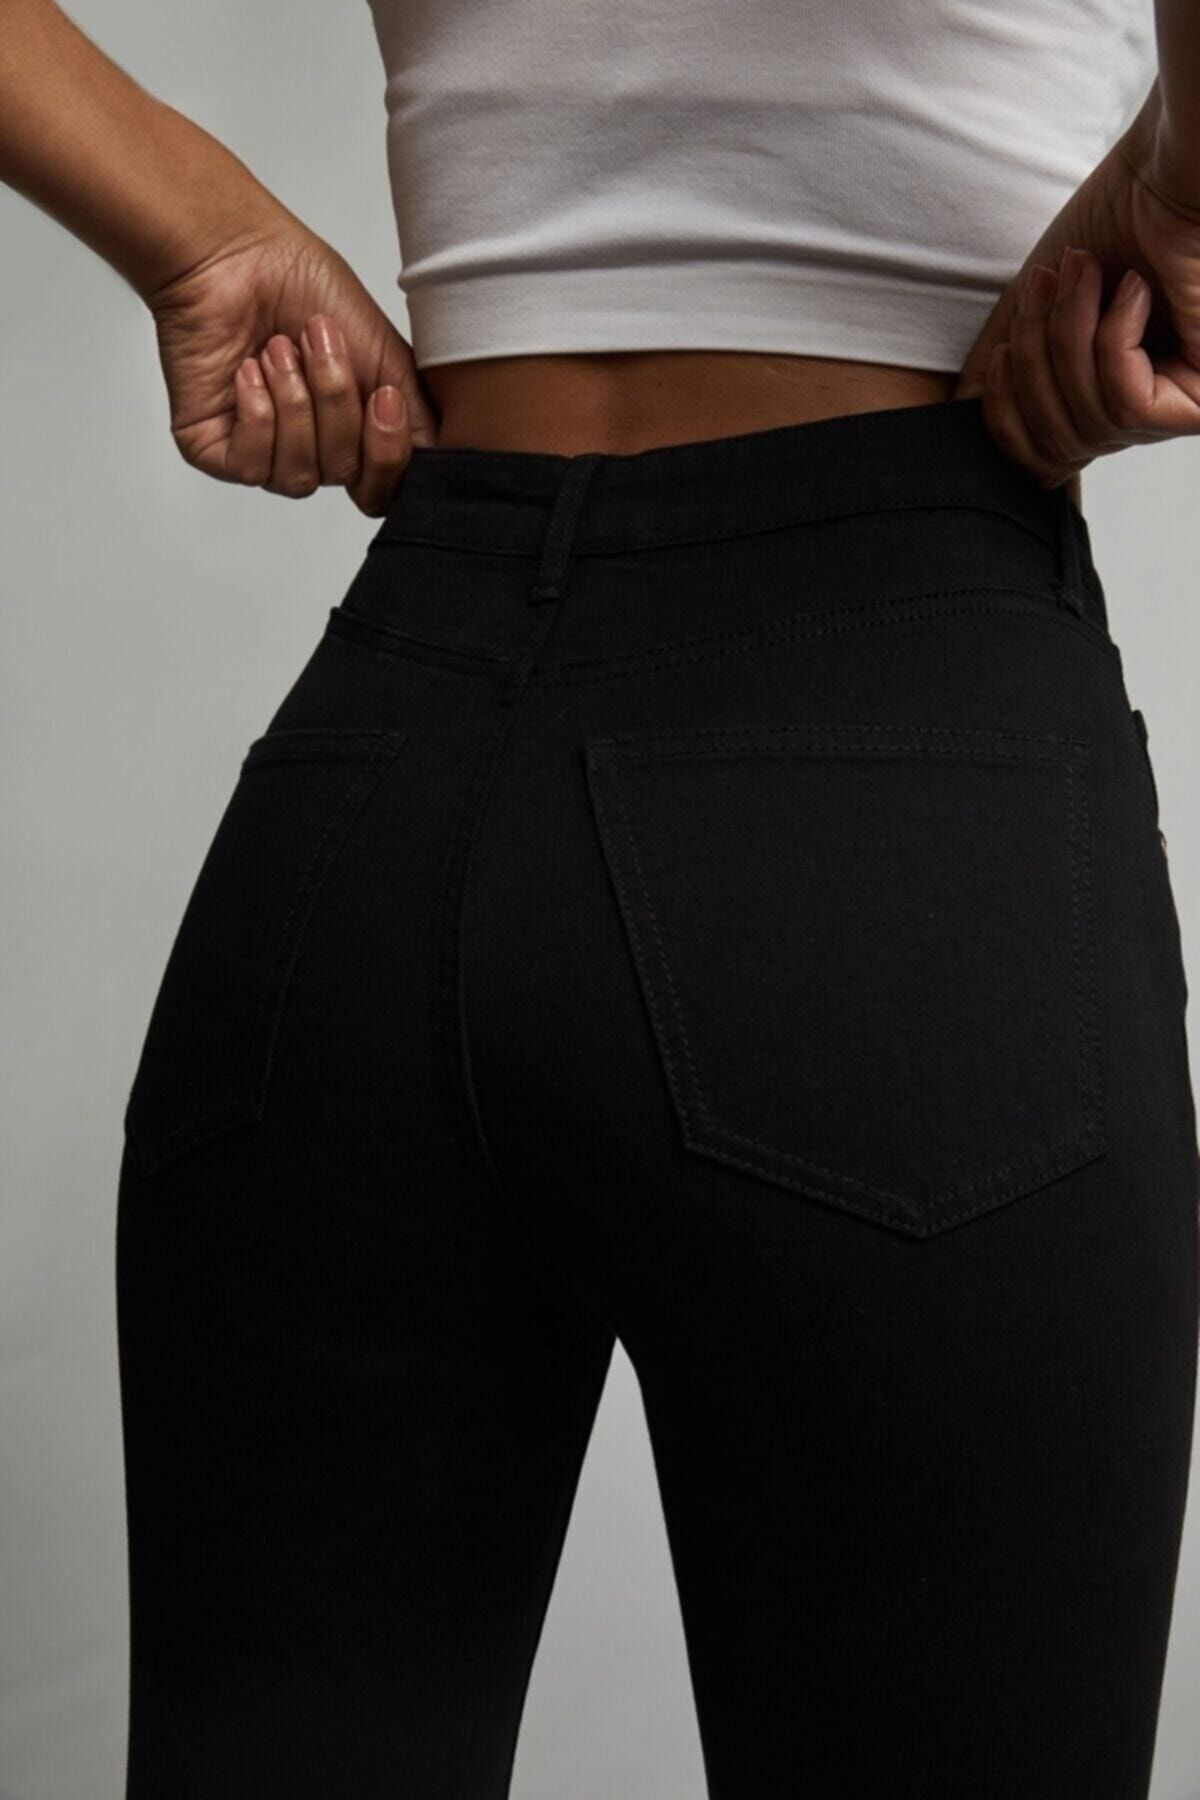 byhaziran butik Solmayan Siyah Yüksek Bel Toparlayıcı Kot Pantolon